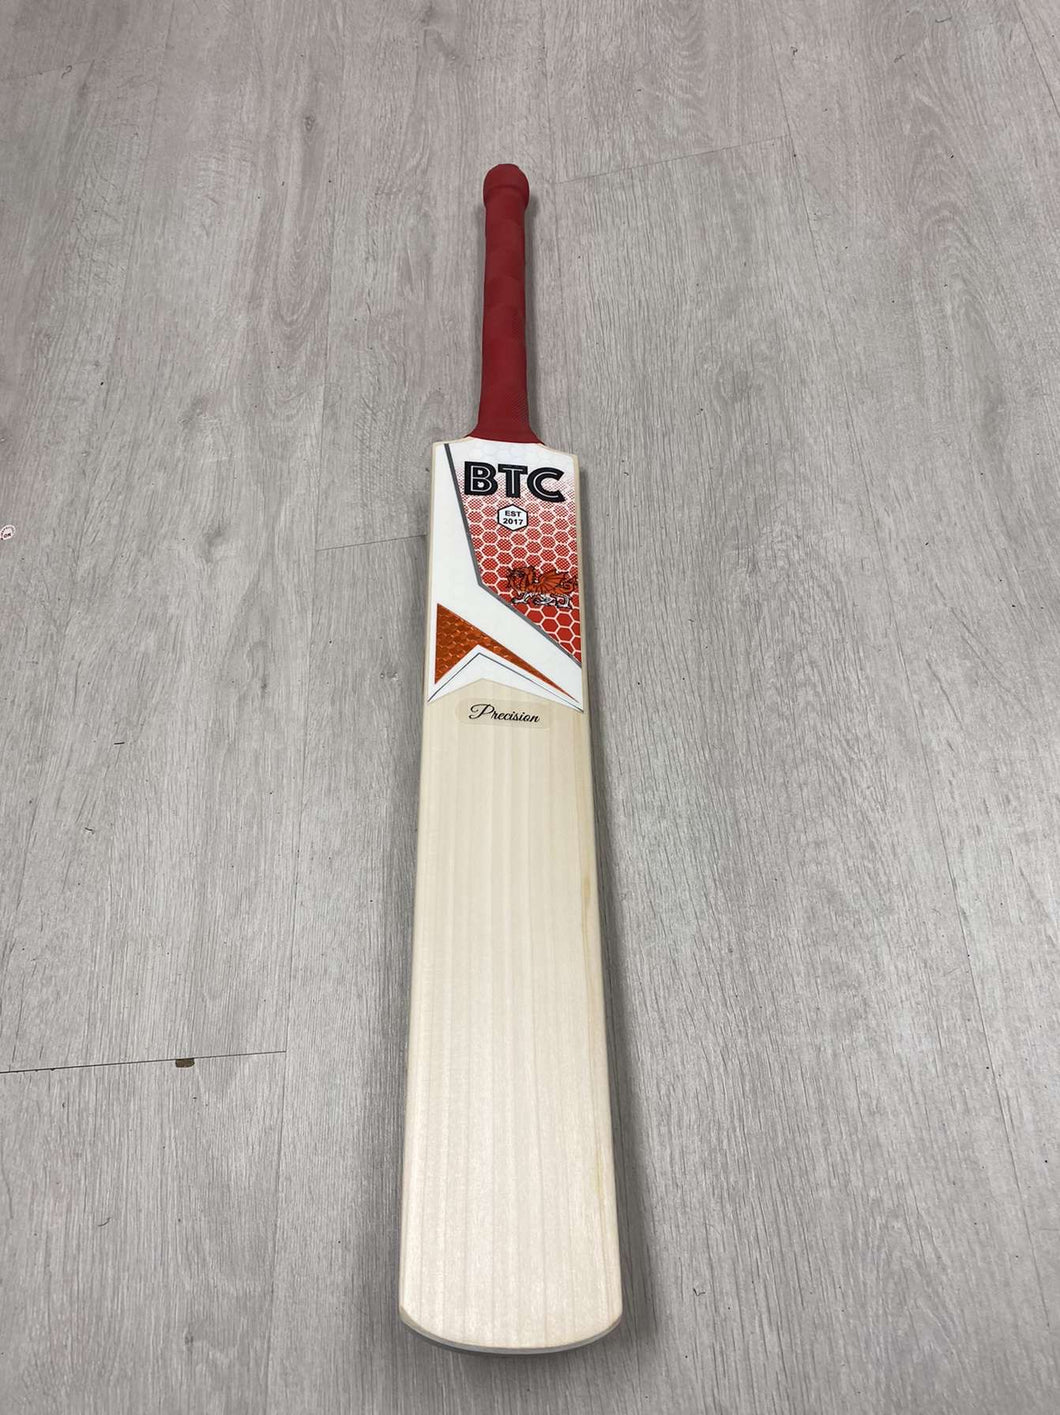 BTC Wales Size 6 Precision Bat 2